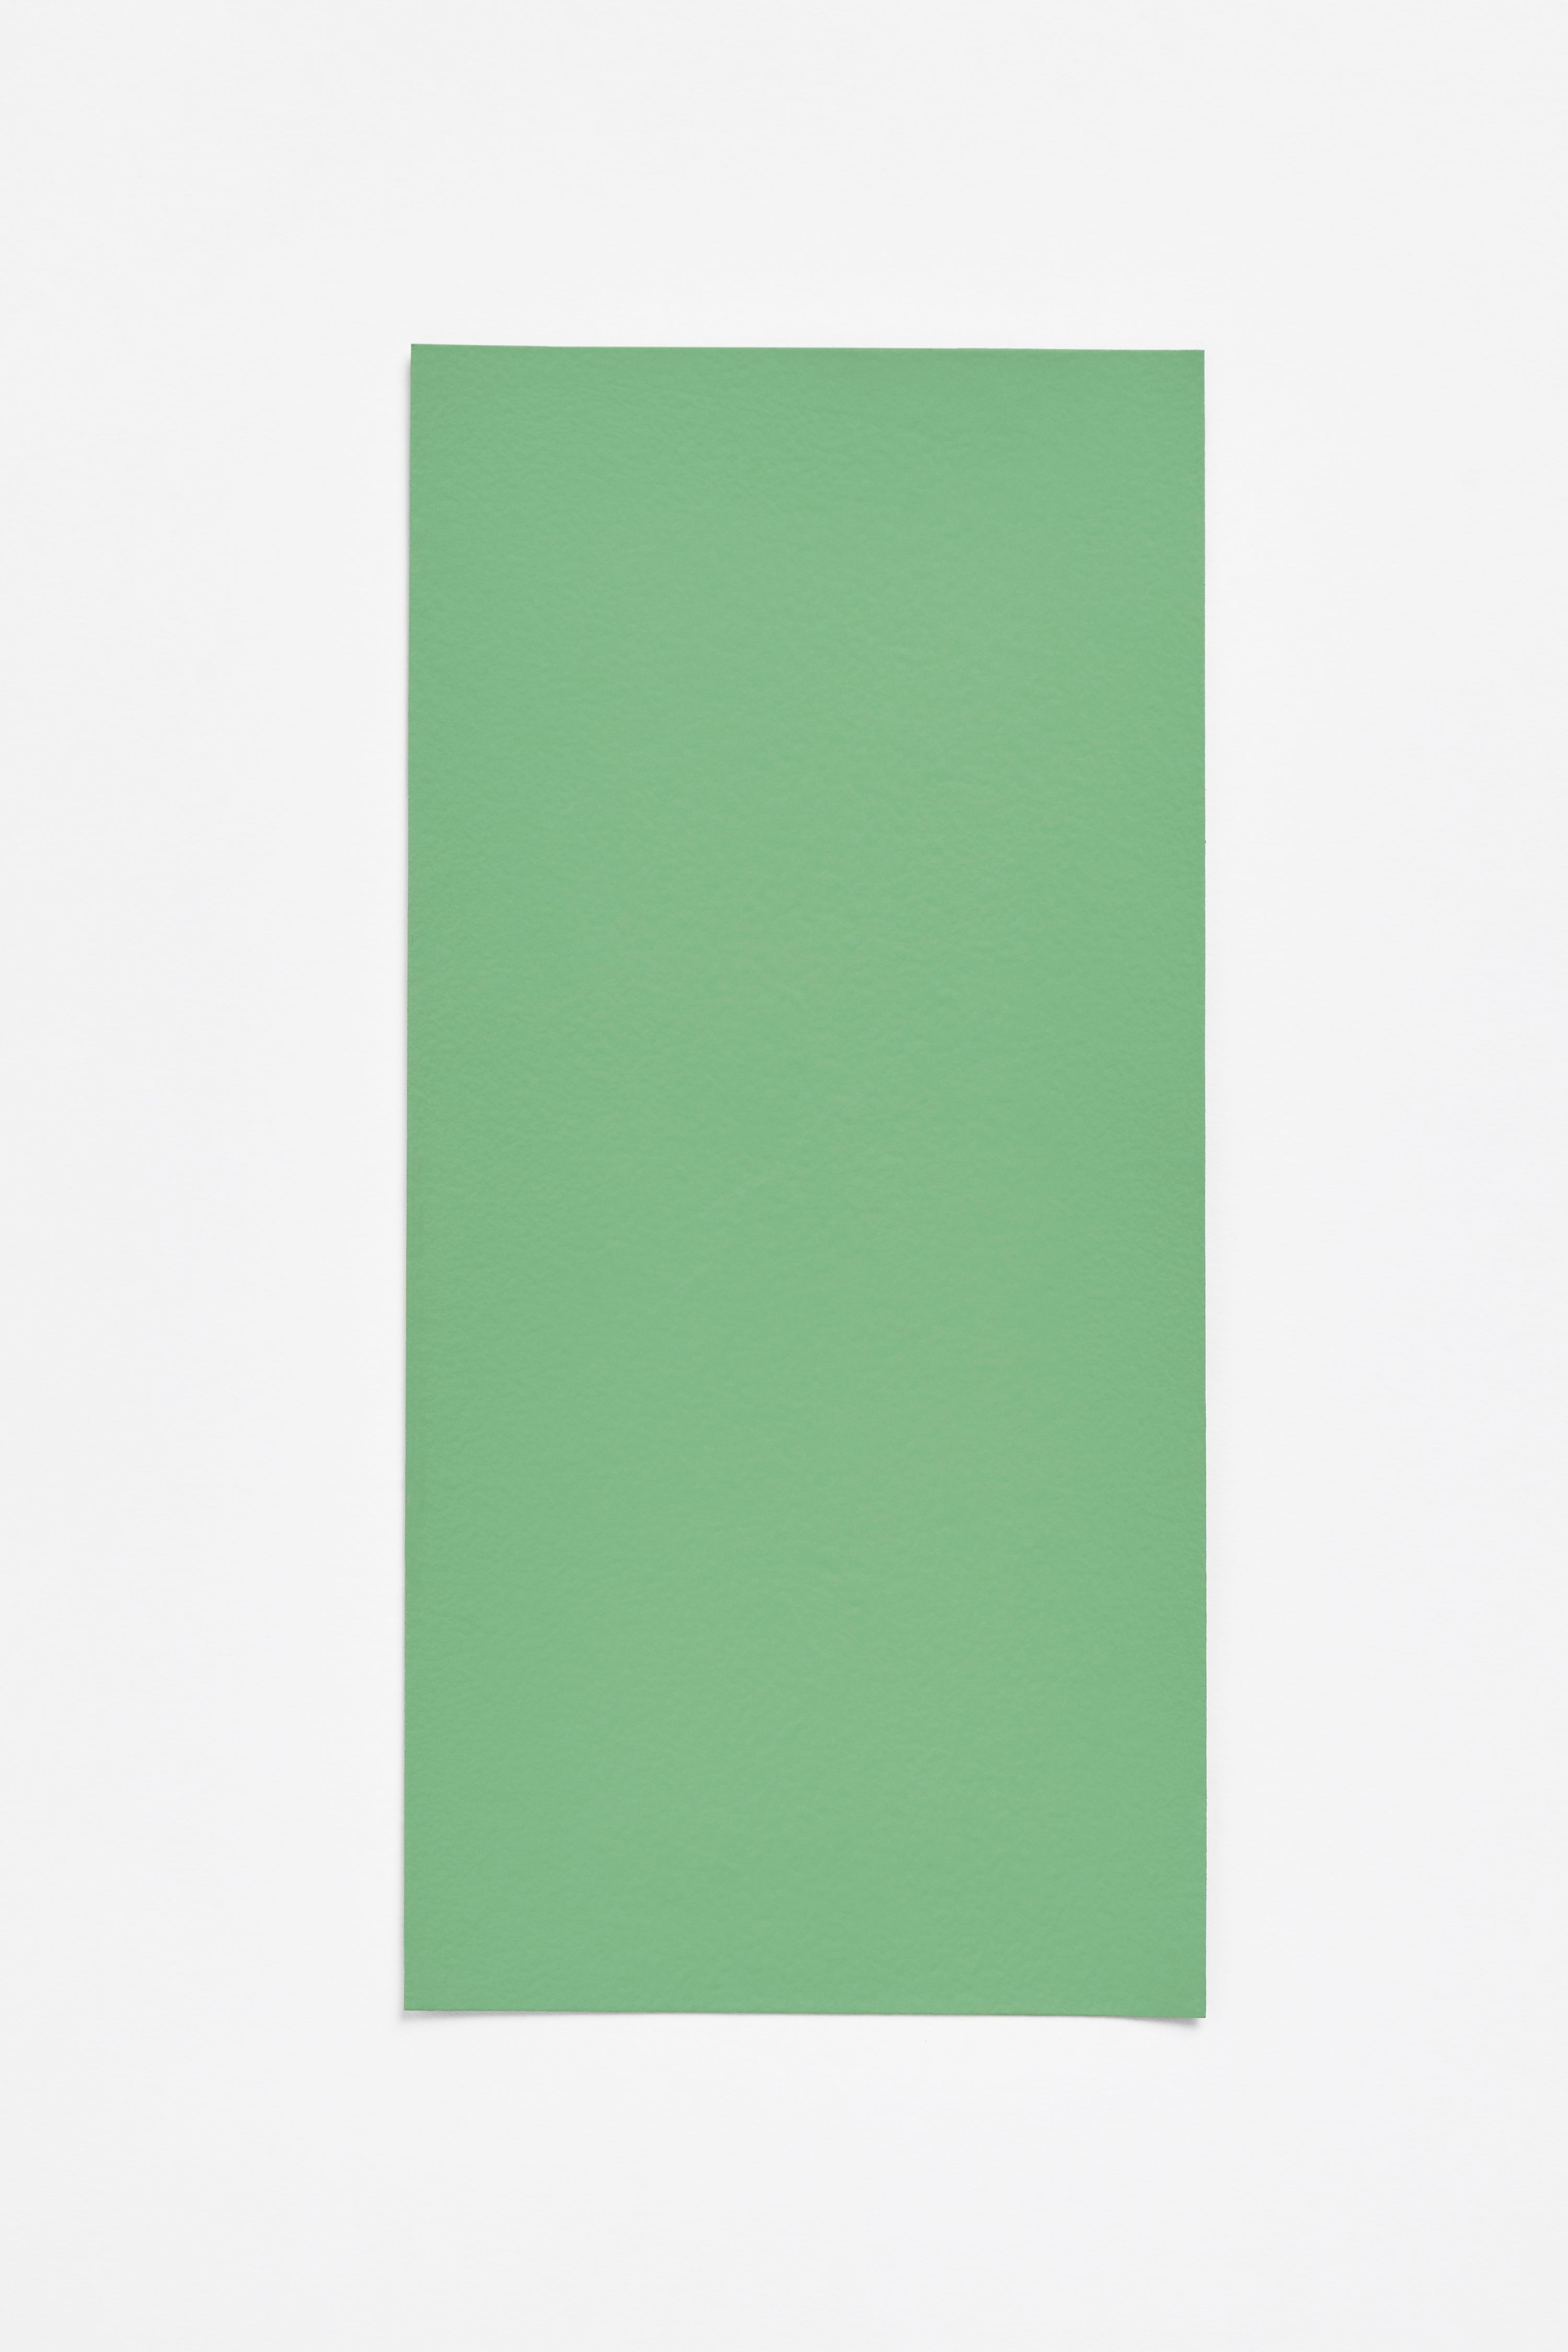 Rhubarbe — a paint colour developed by Inga Sempé for Blēo